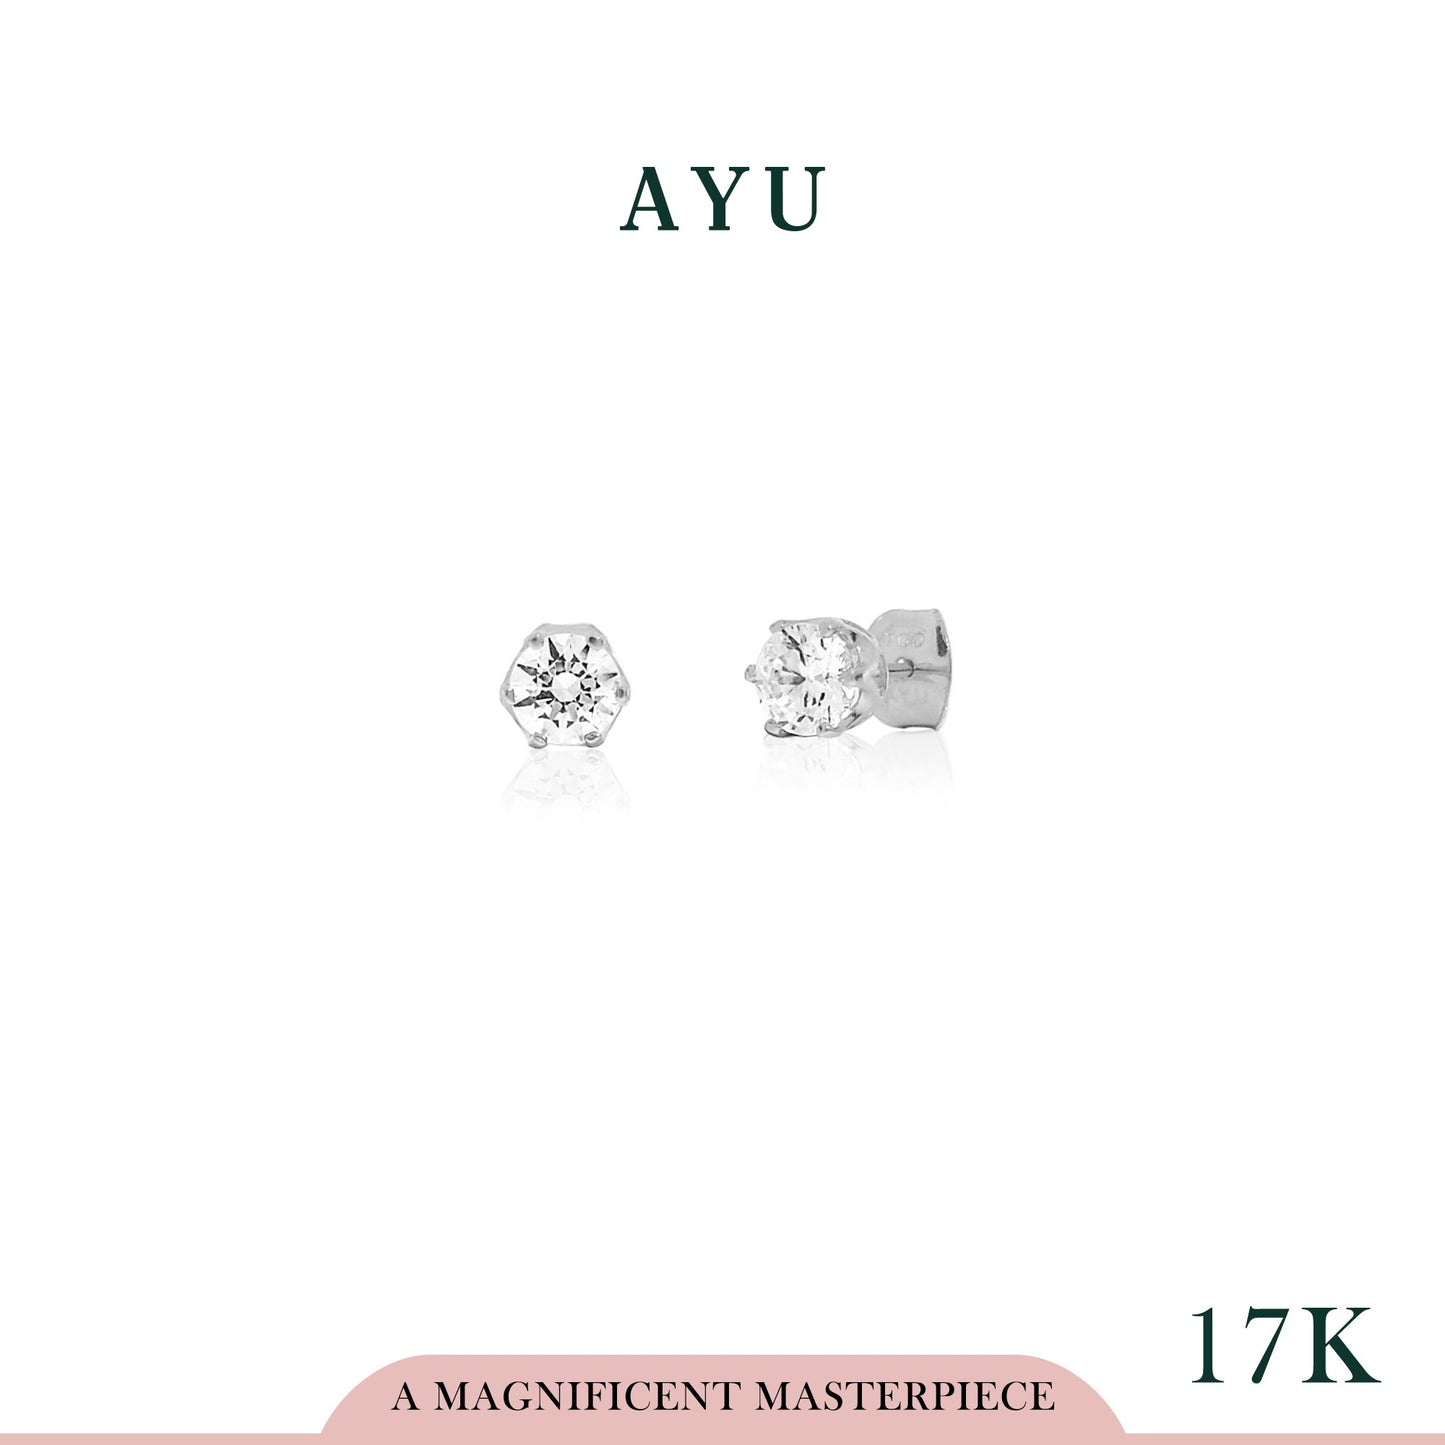 AYU Antng Emas - 6 Prong Studs 17K White Gold